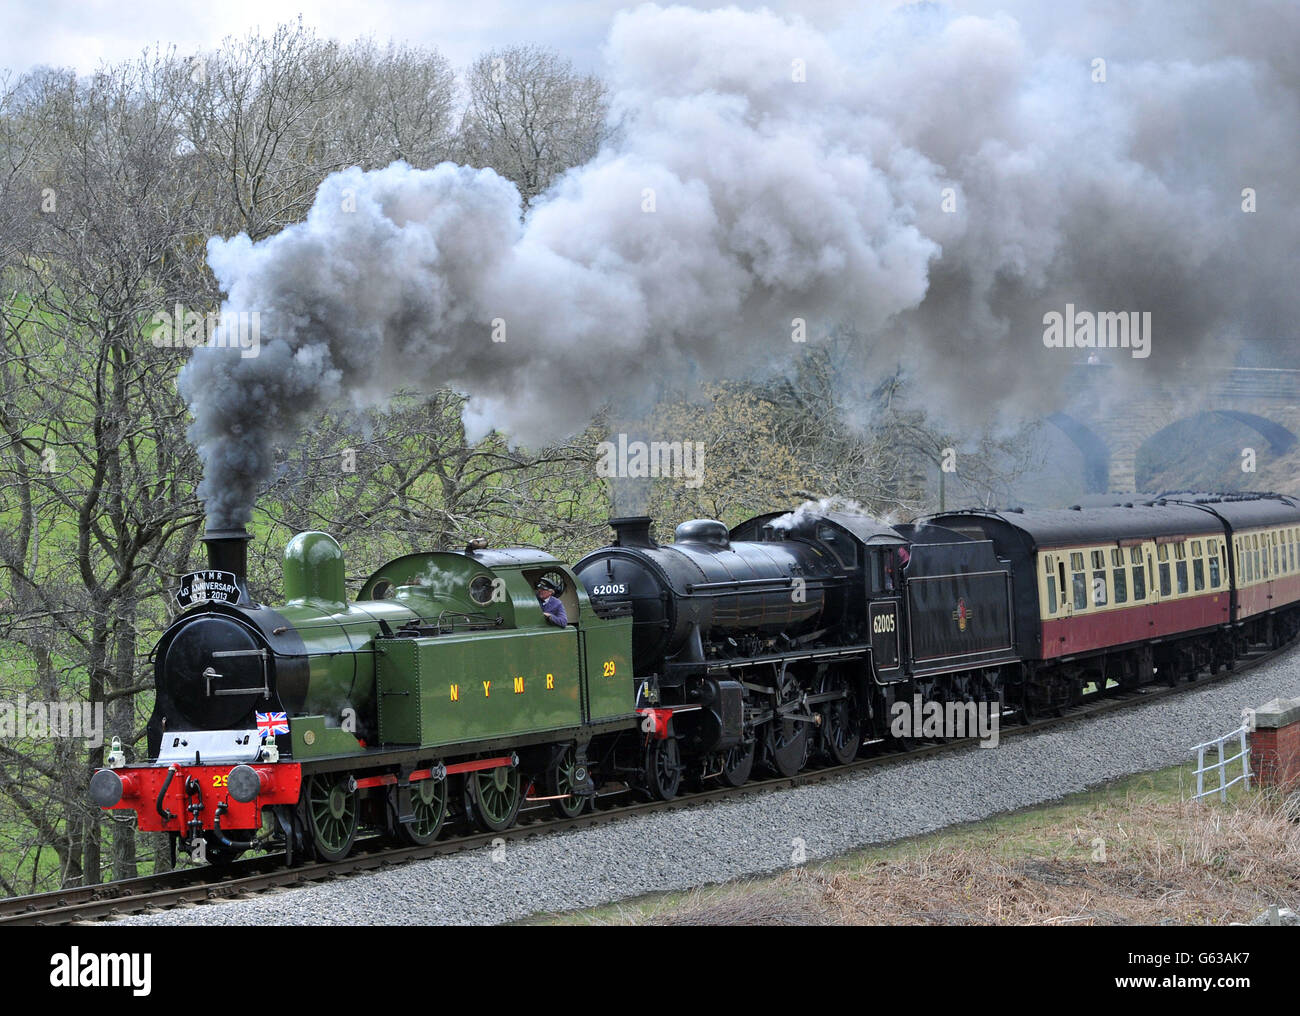 Great britain steam фото 118